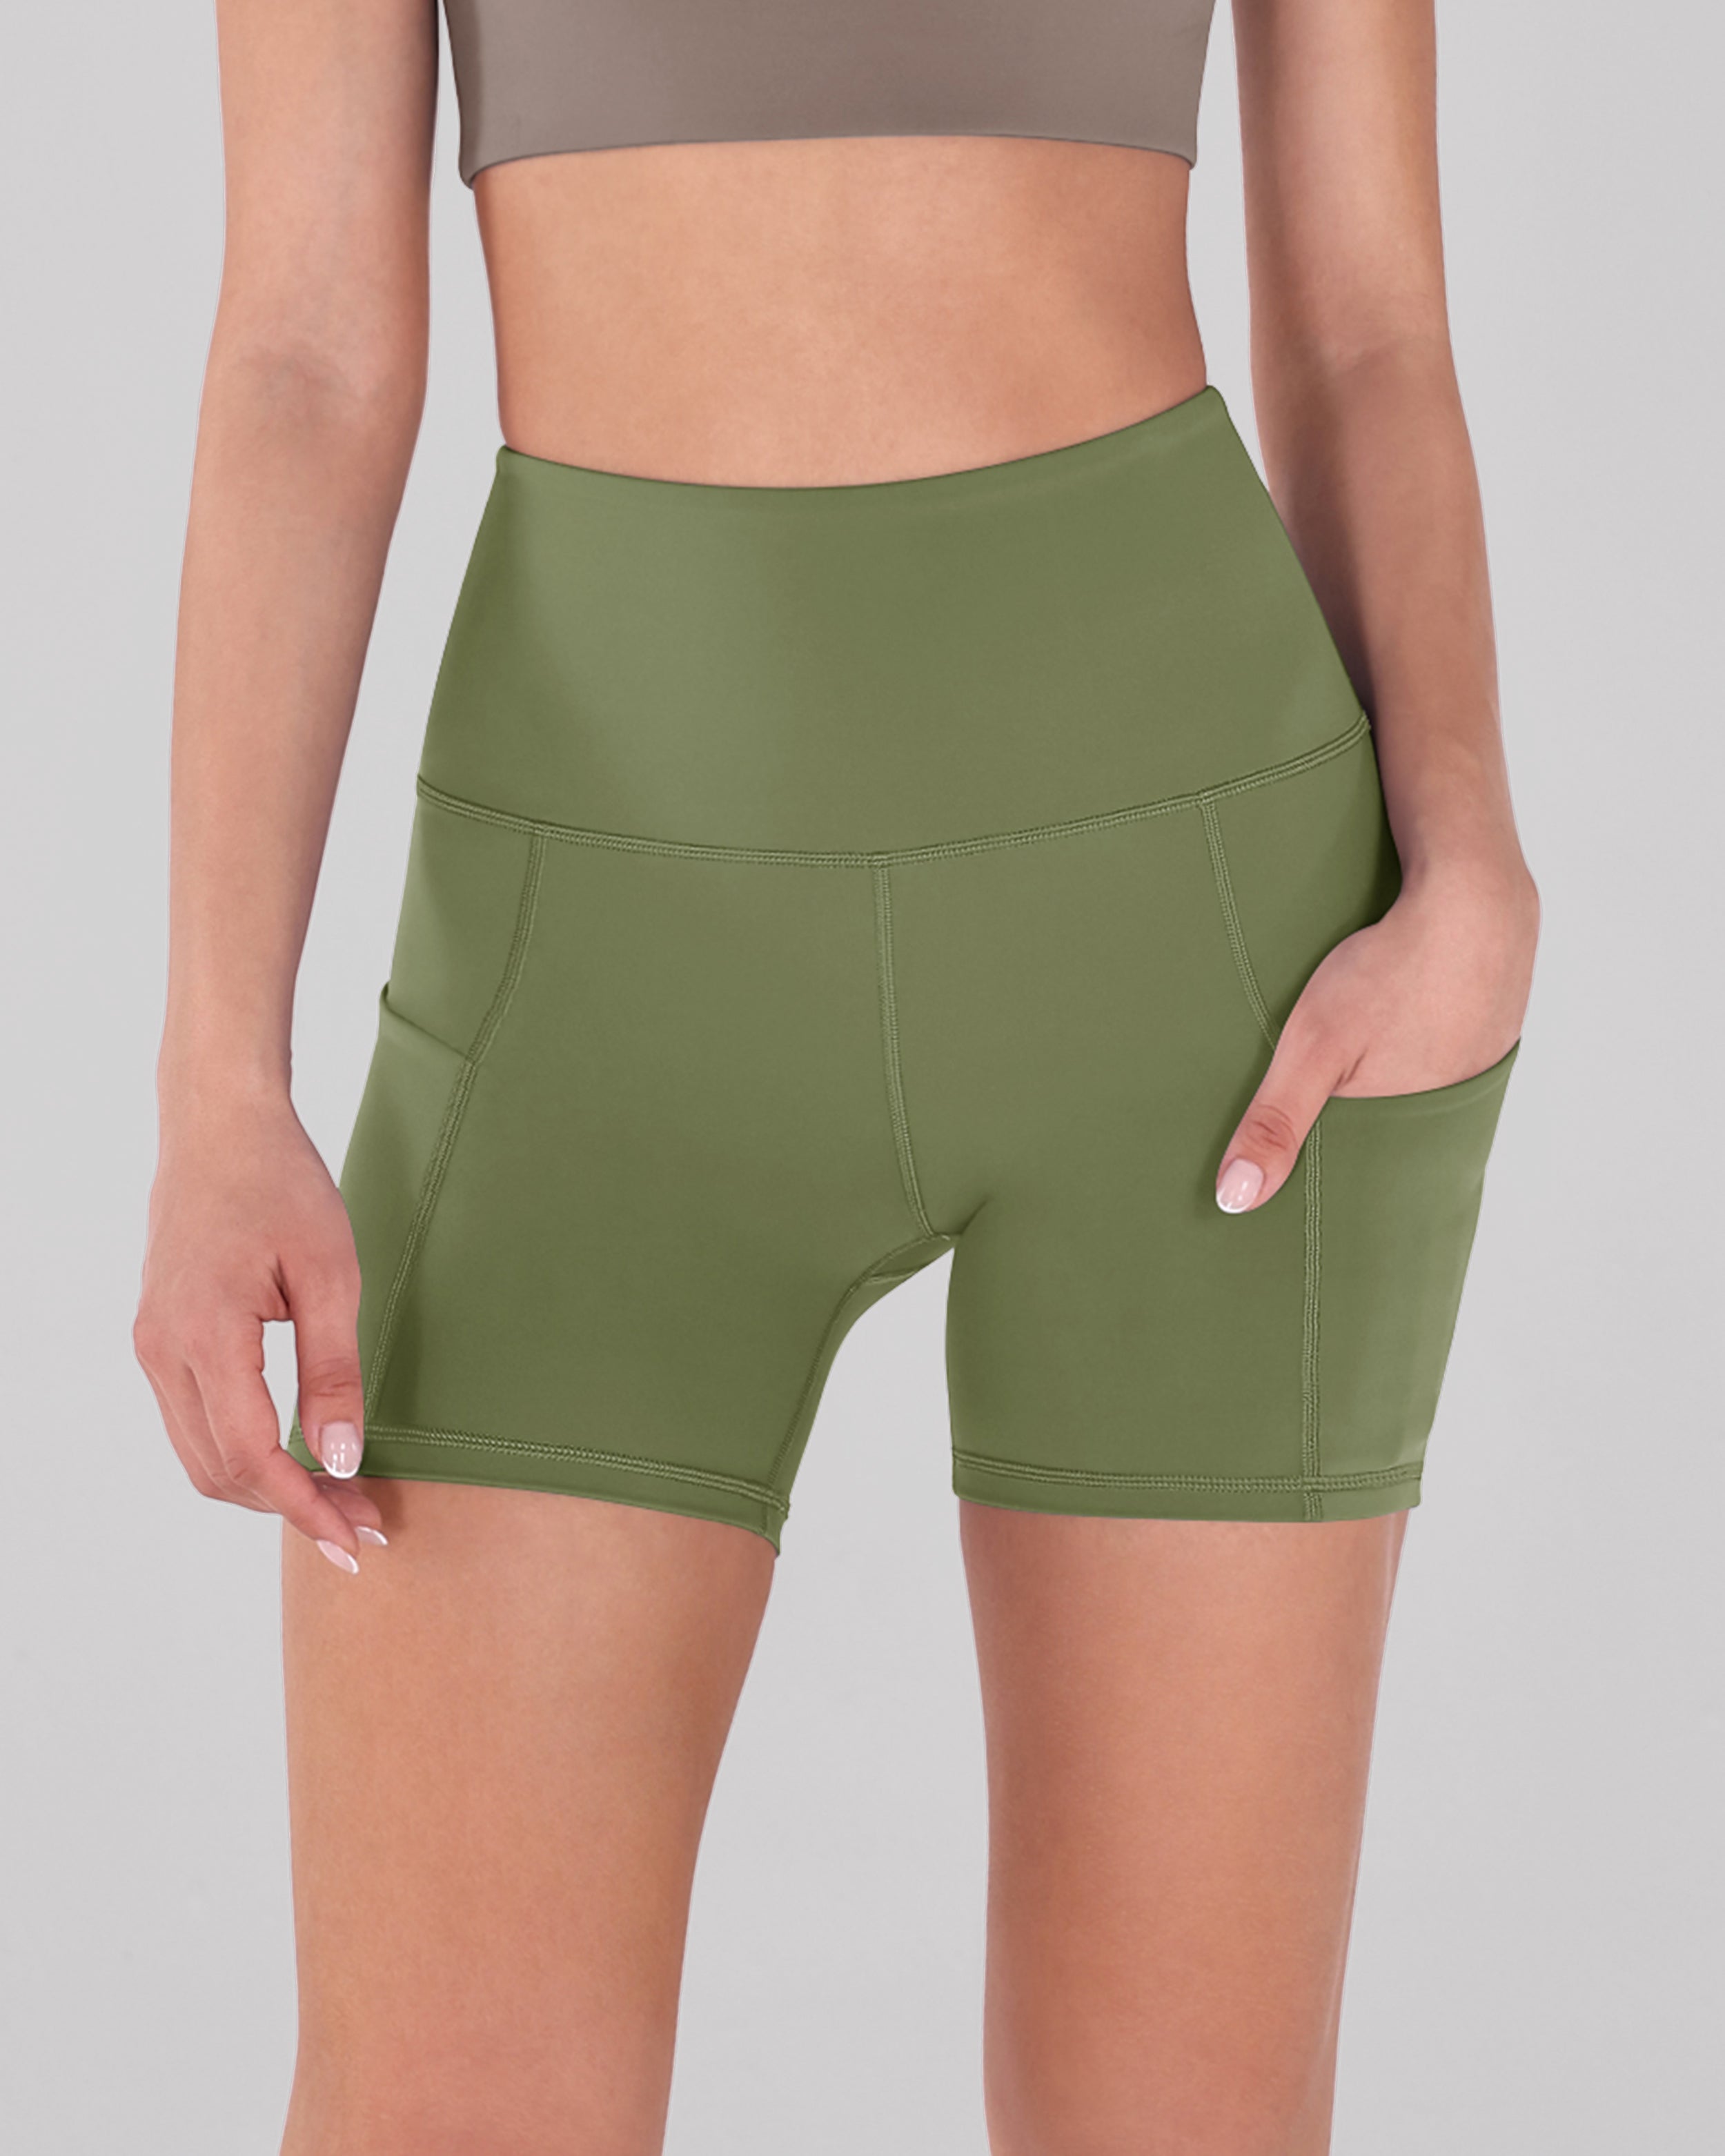 5" High Waist Tummy Control Shorts with Pockets Dark Olive - ododos